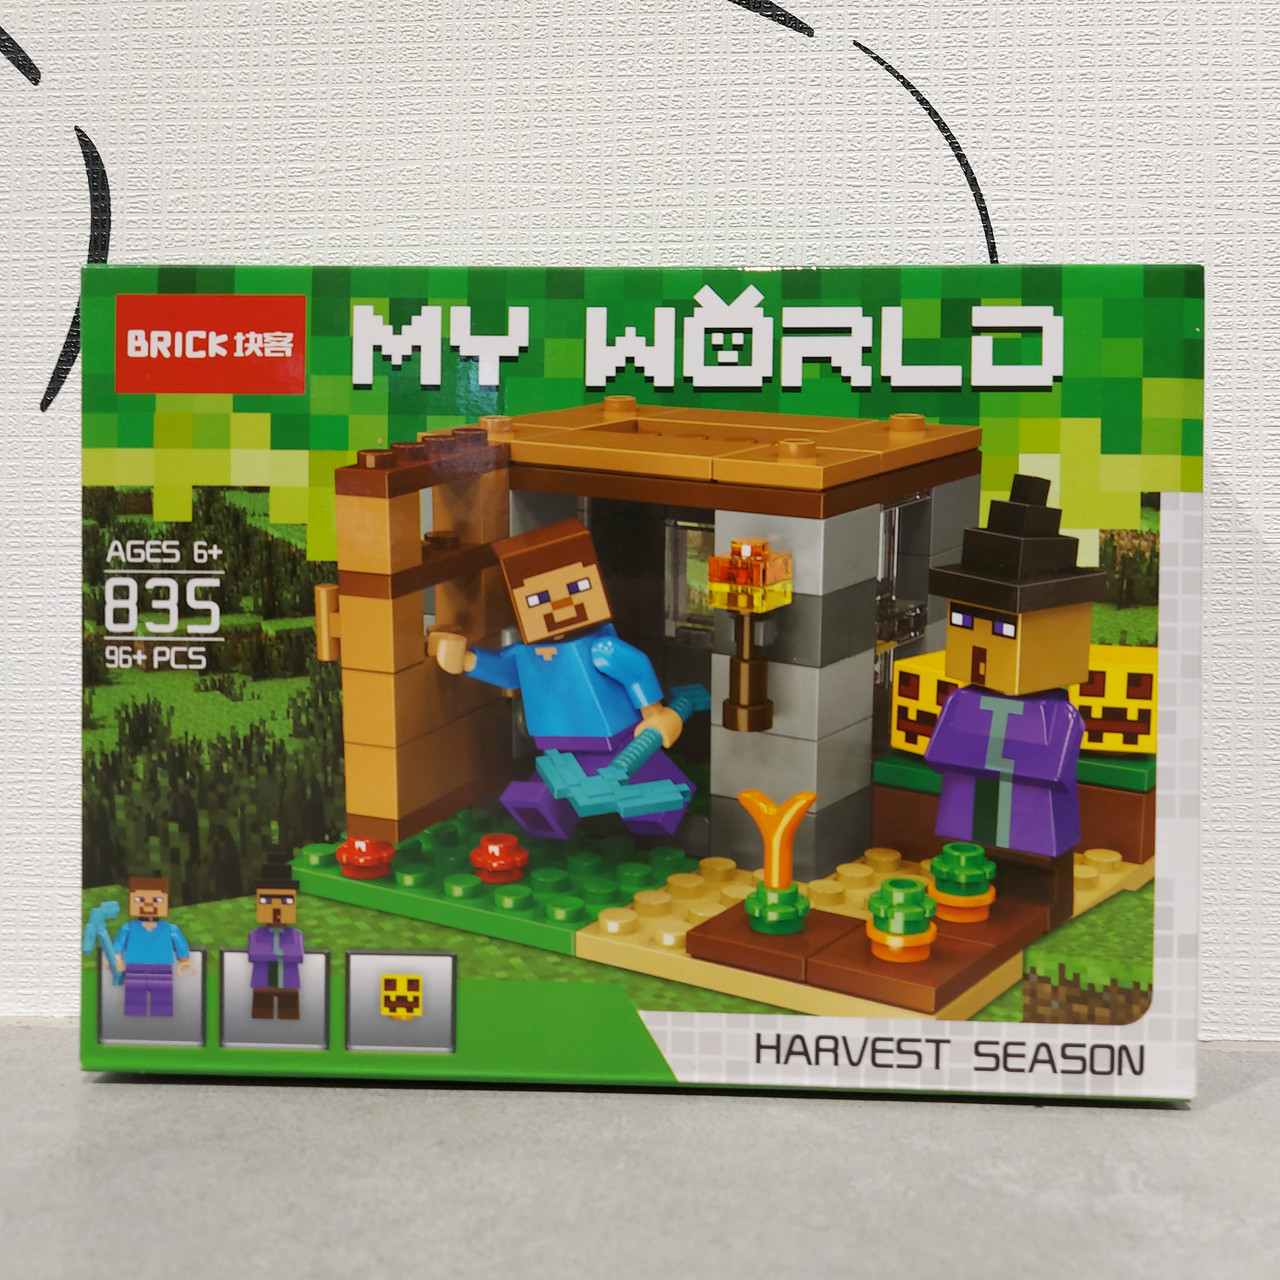 Конструктор Brick  My world 835 96 pcs. "Ведьма". Minecraft. Майнкрафт.